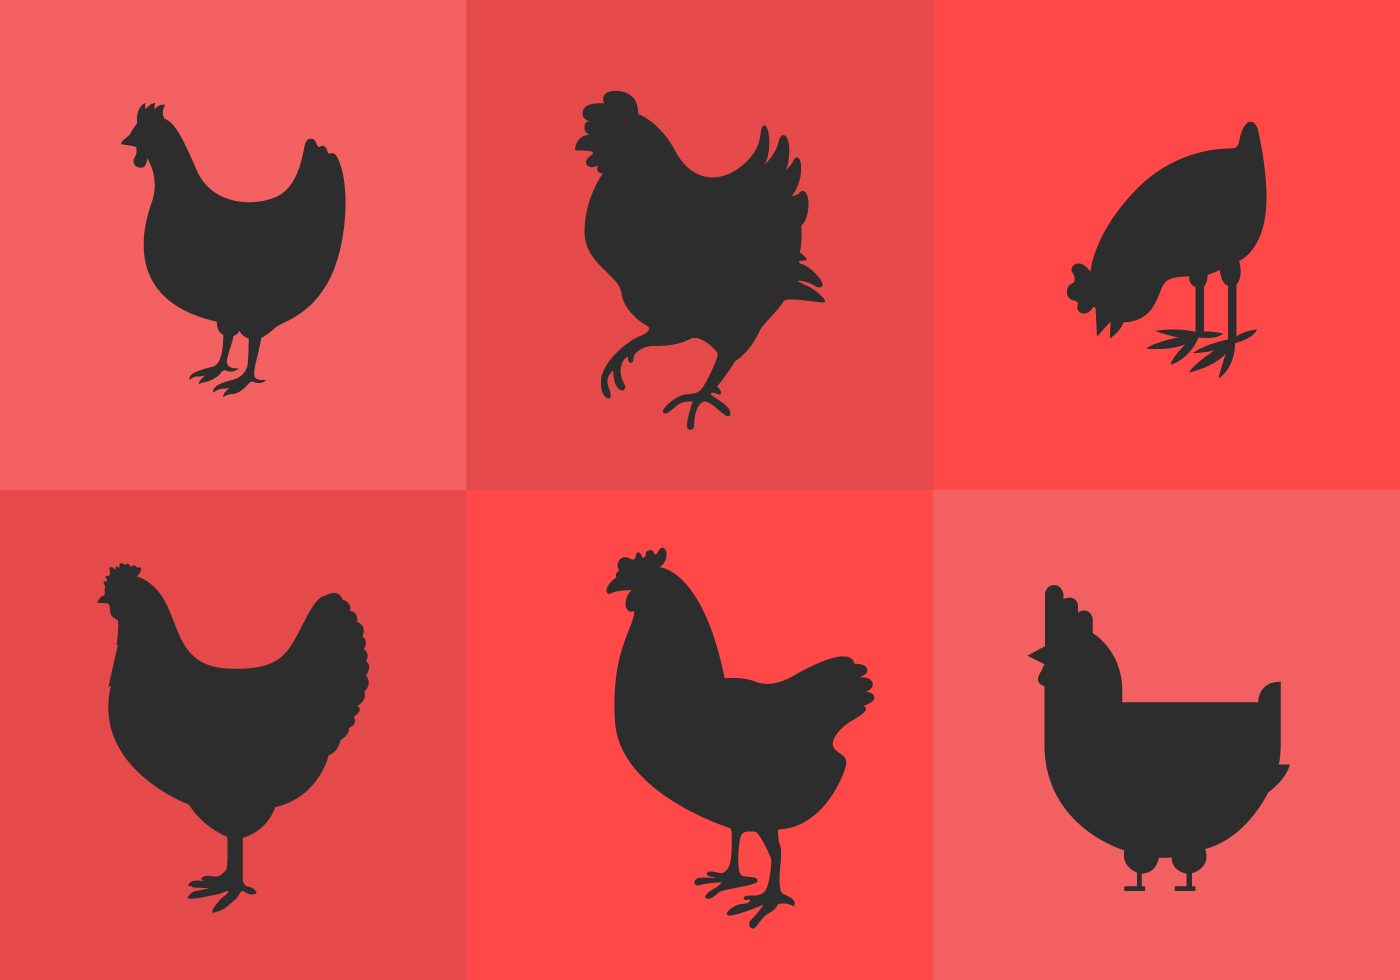 Chicken Silhouette Vectors - Download Free Vector Art, Stock Graphics & Images